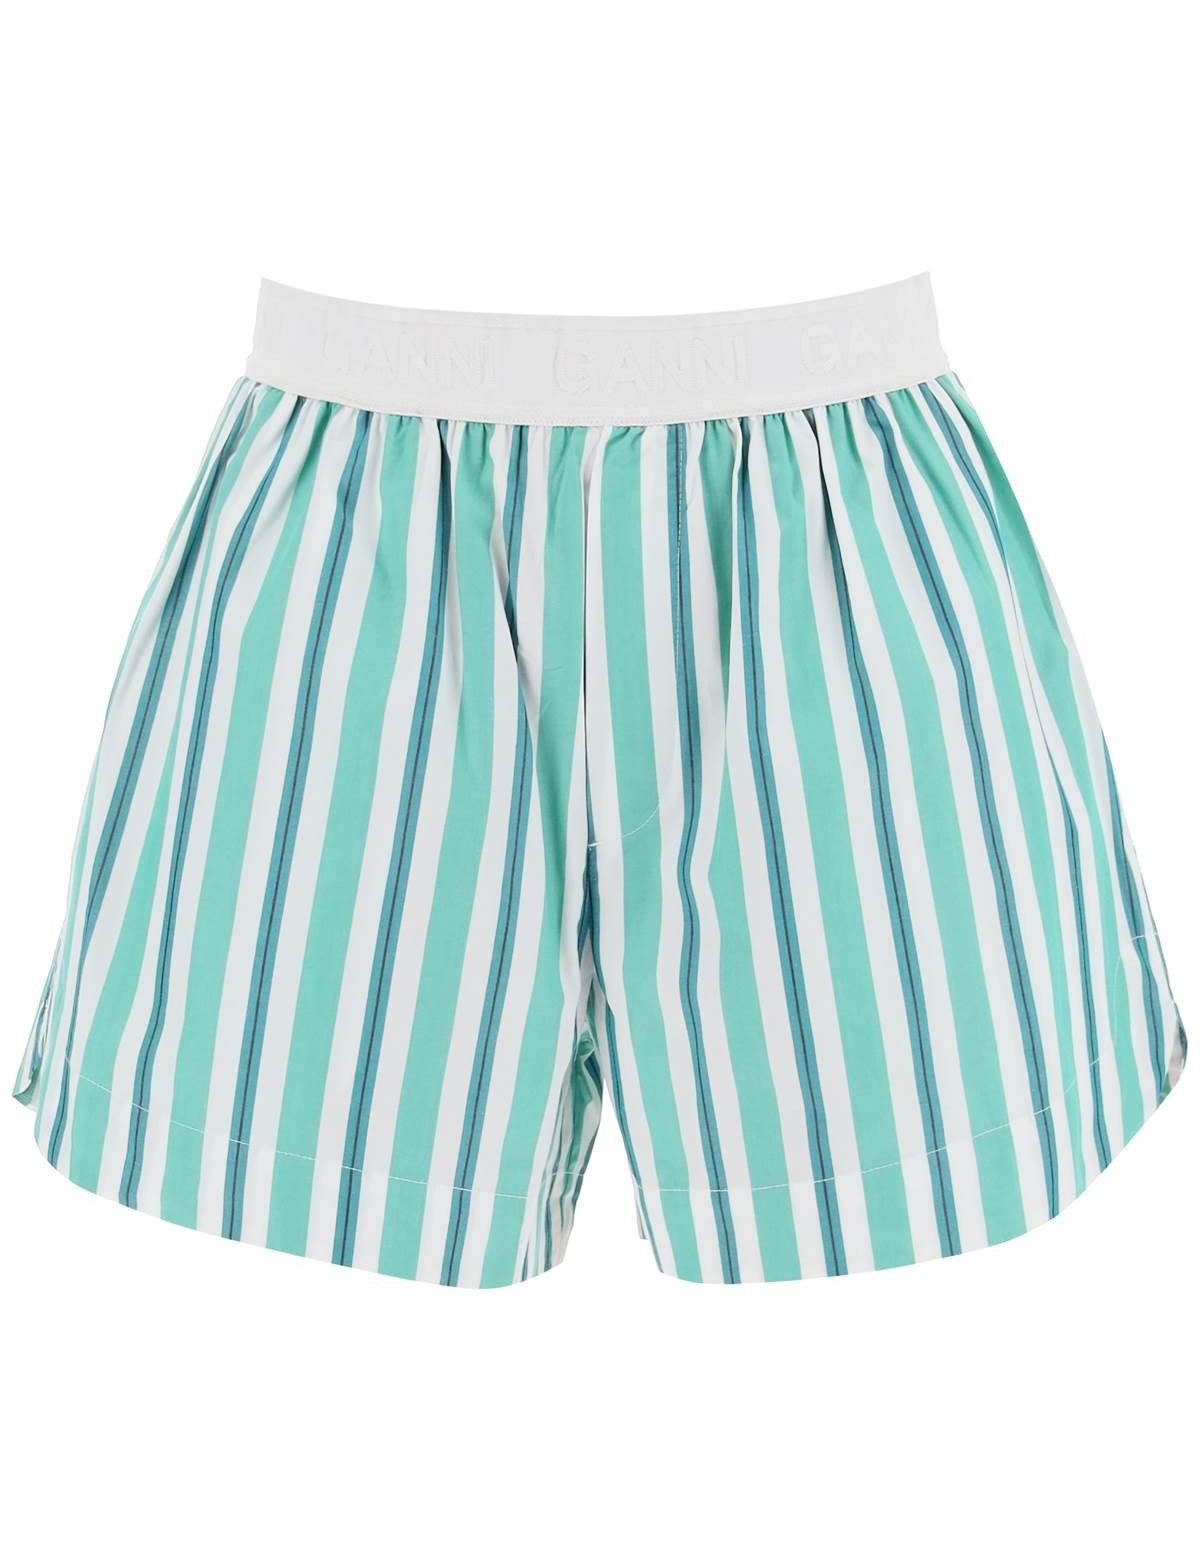 striped-shorts-with-elastic-waistband.jpg